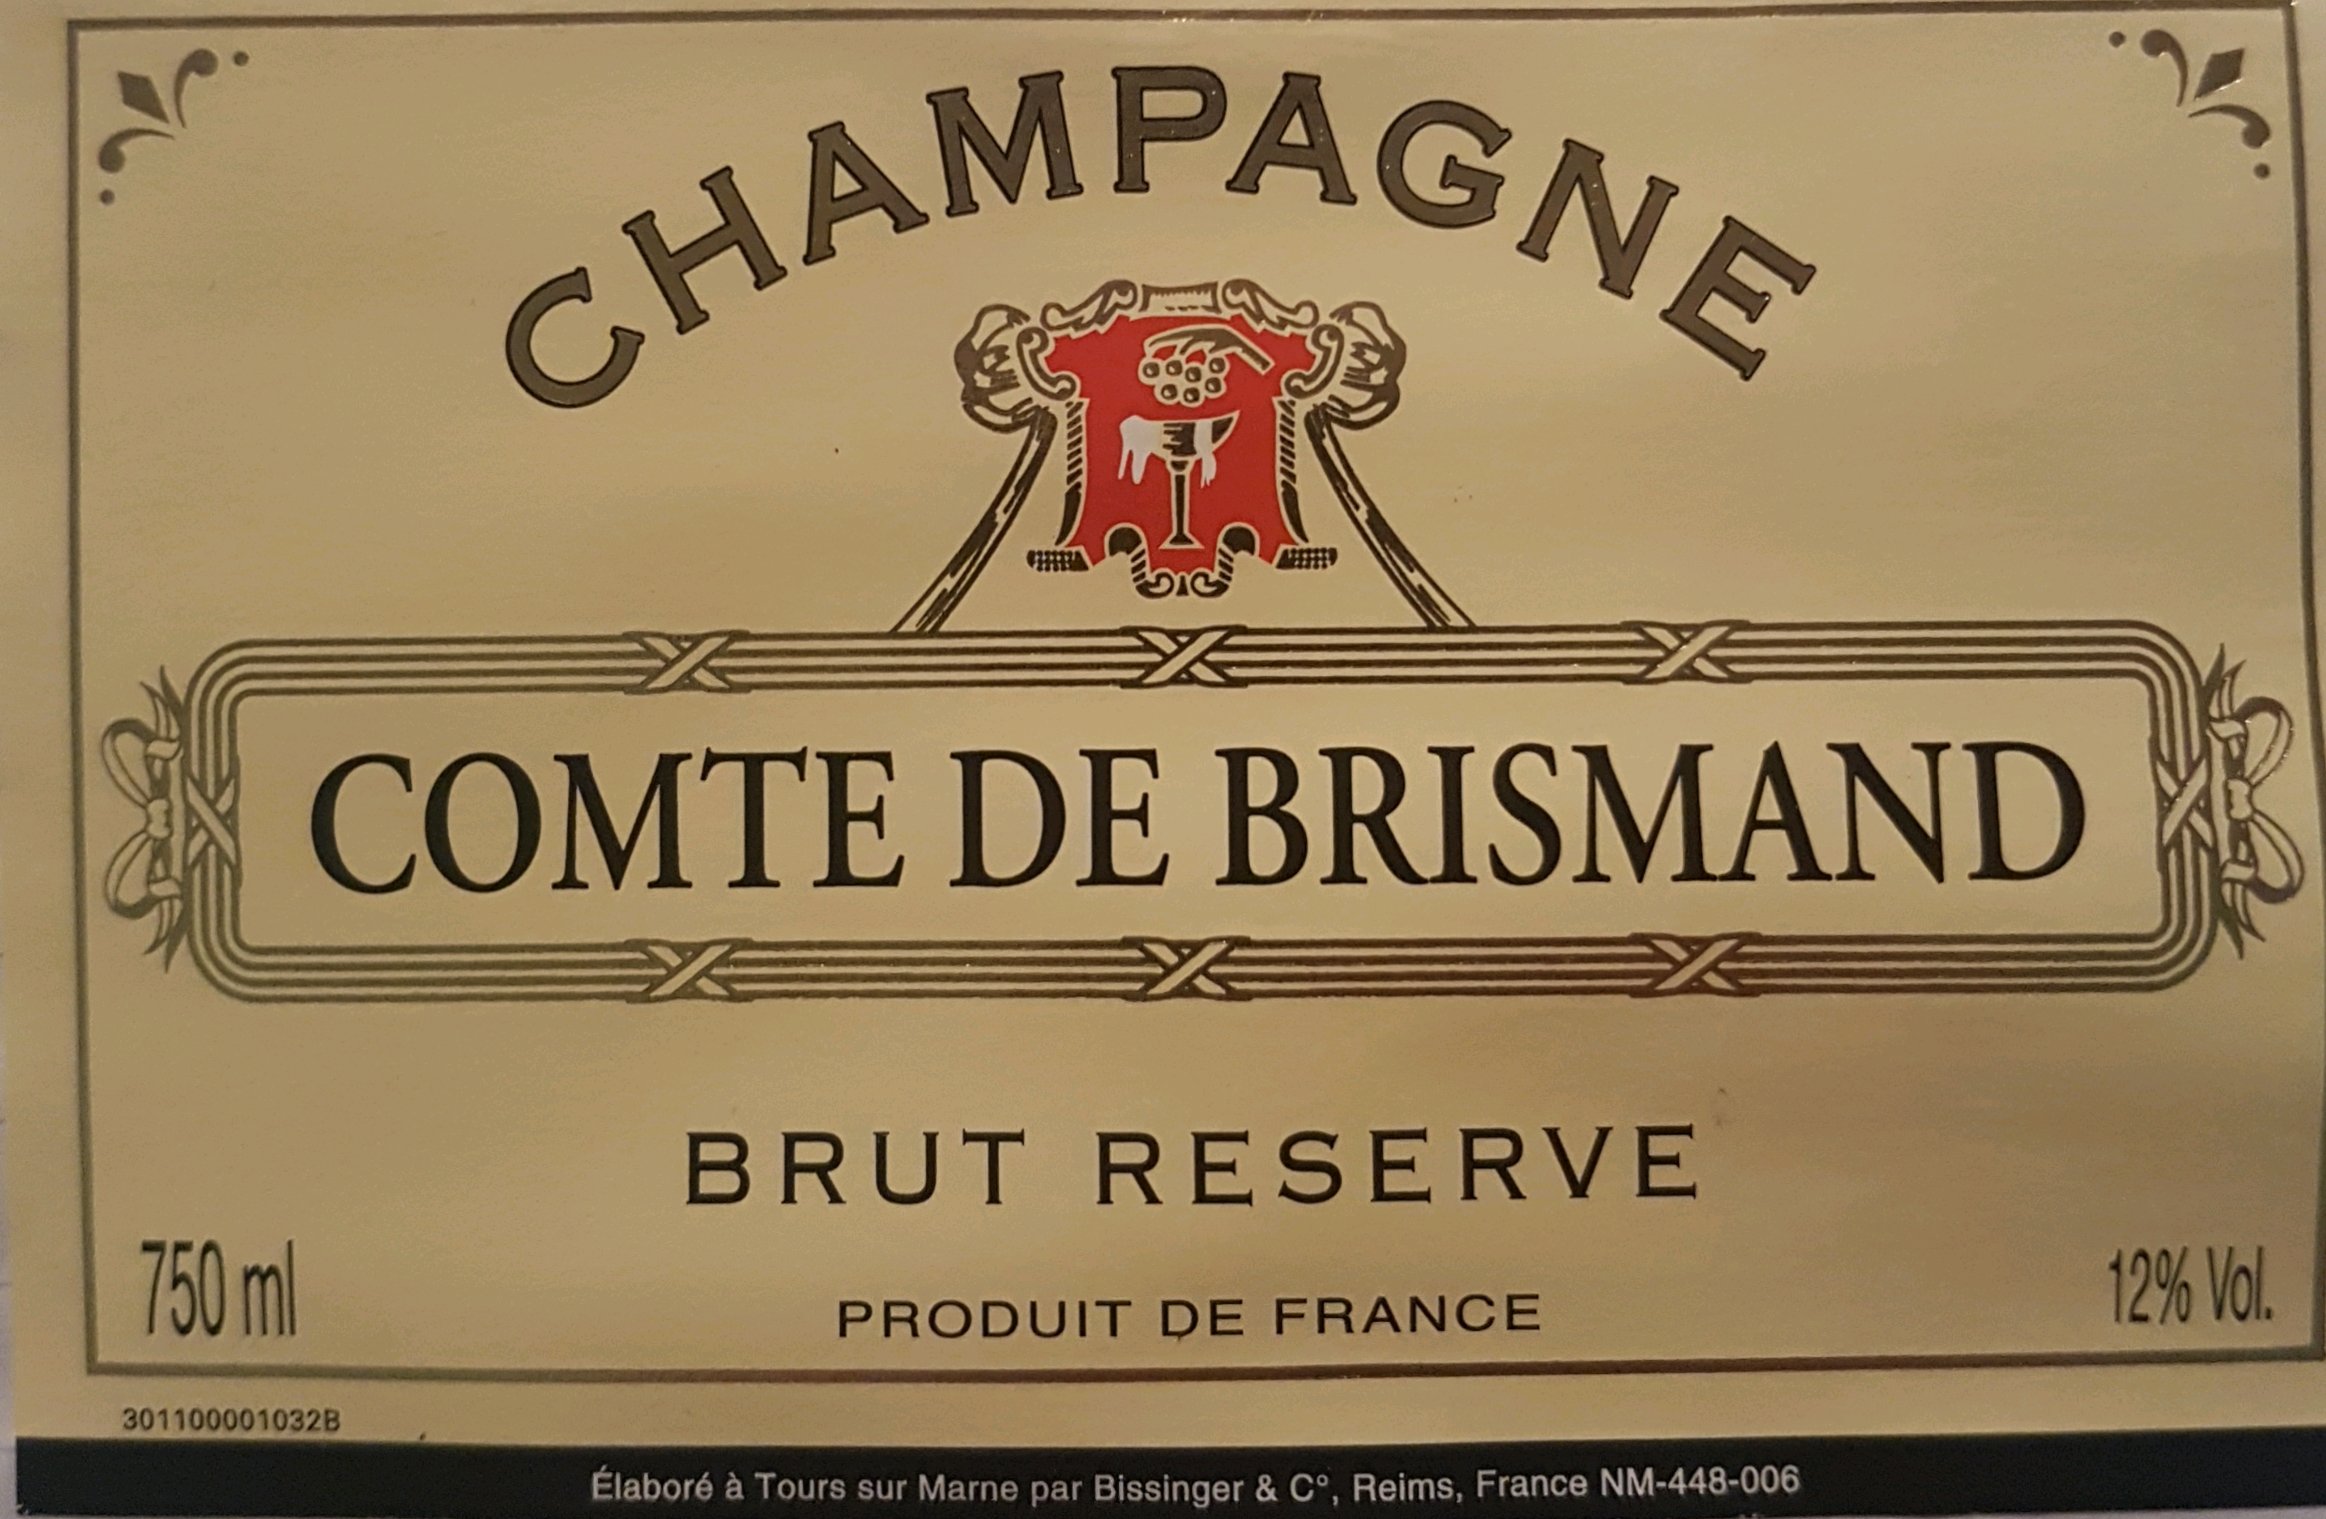 Comte 12% The Reserve Winesday Champagne de – France Brut Brismand Review